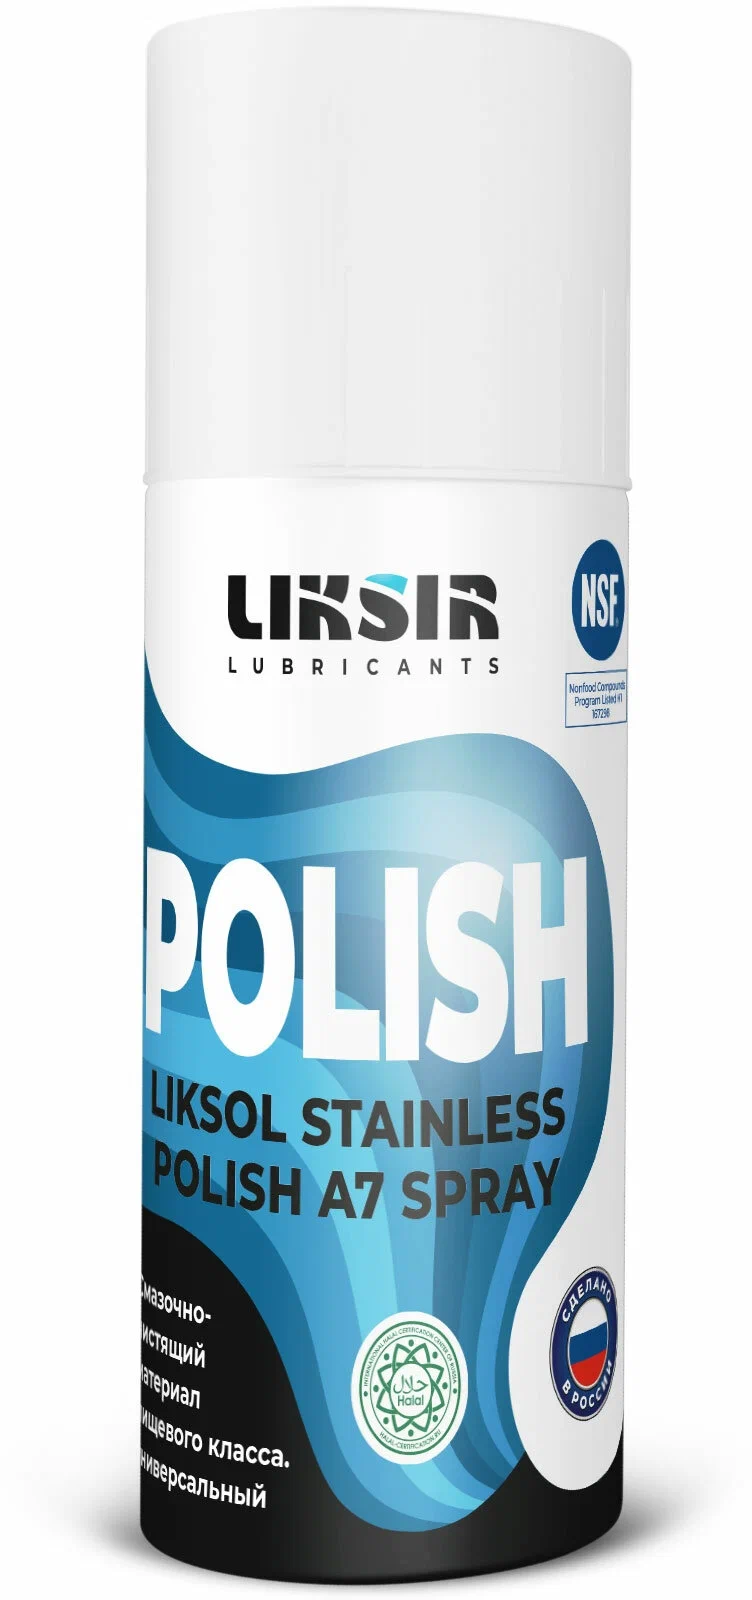 Полироль LIKSIR LIKSOL STAINLESS POLISH A7 Spray с пищевым допуском 520 мл